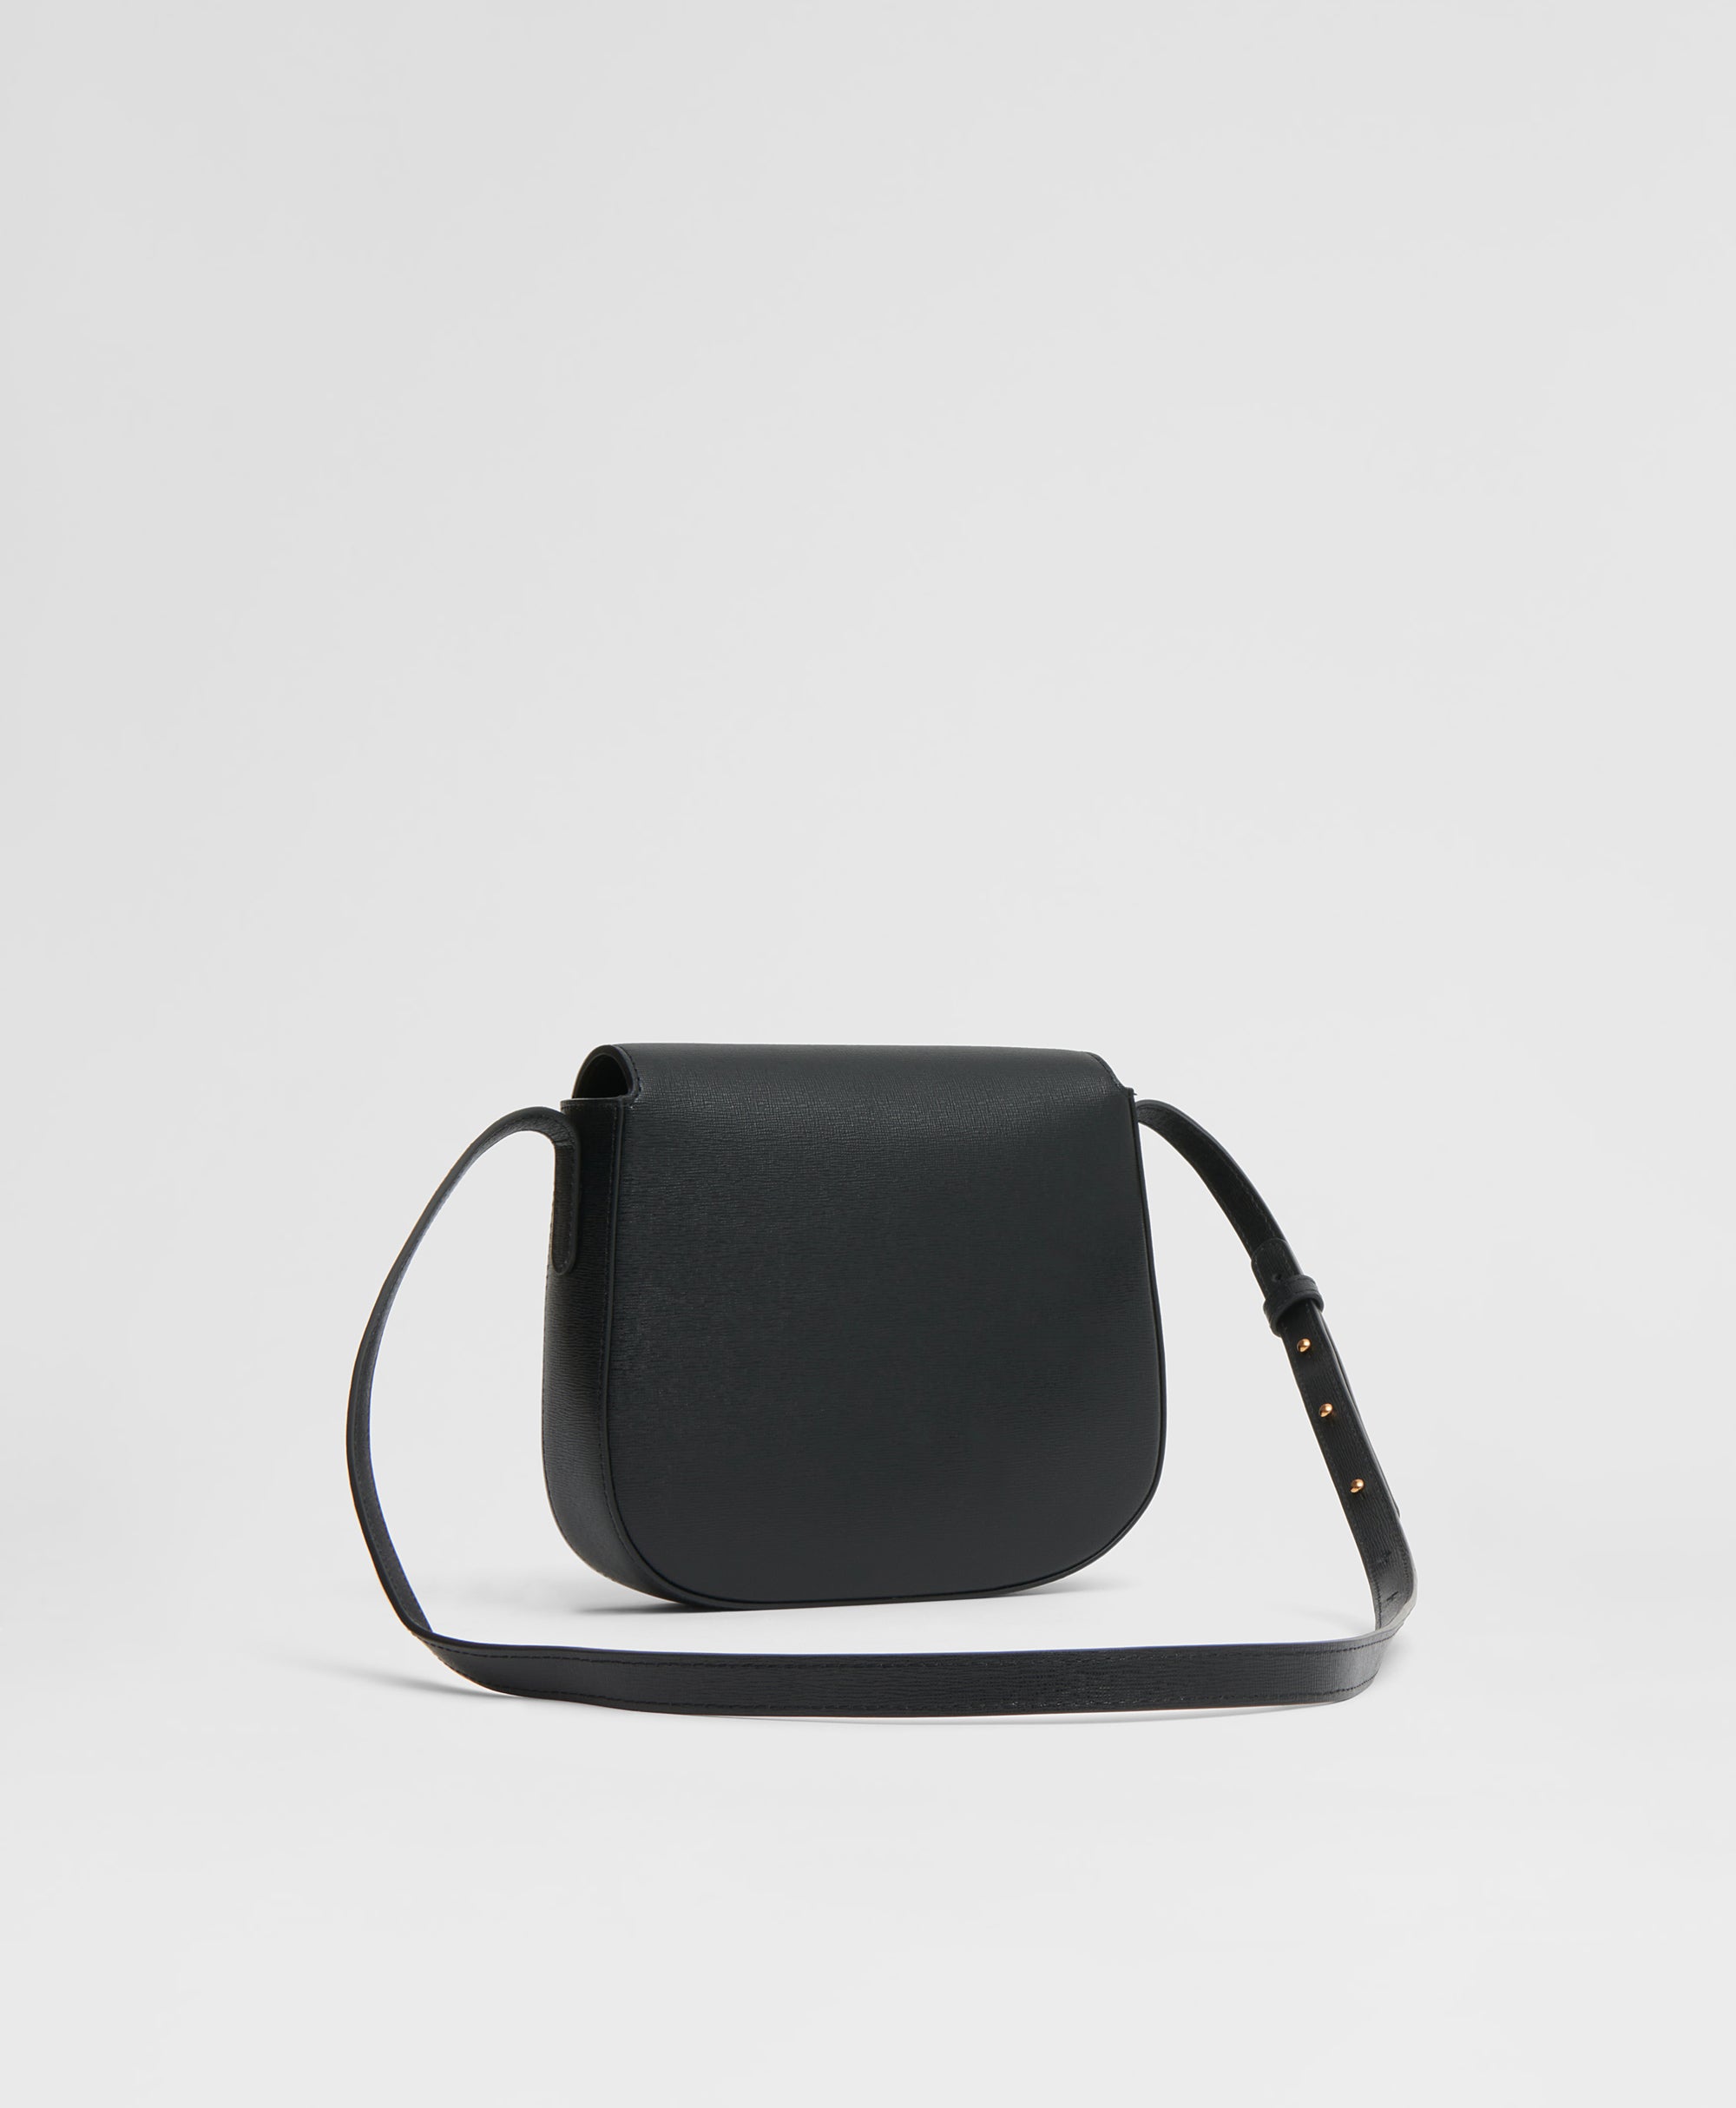 Timeless/Classique leather crossbody bag